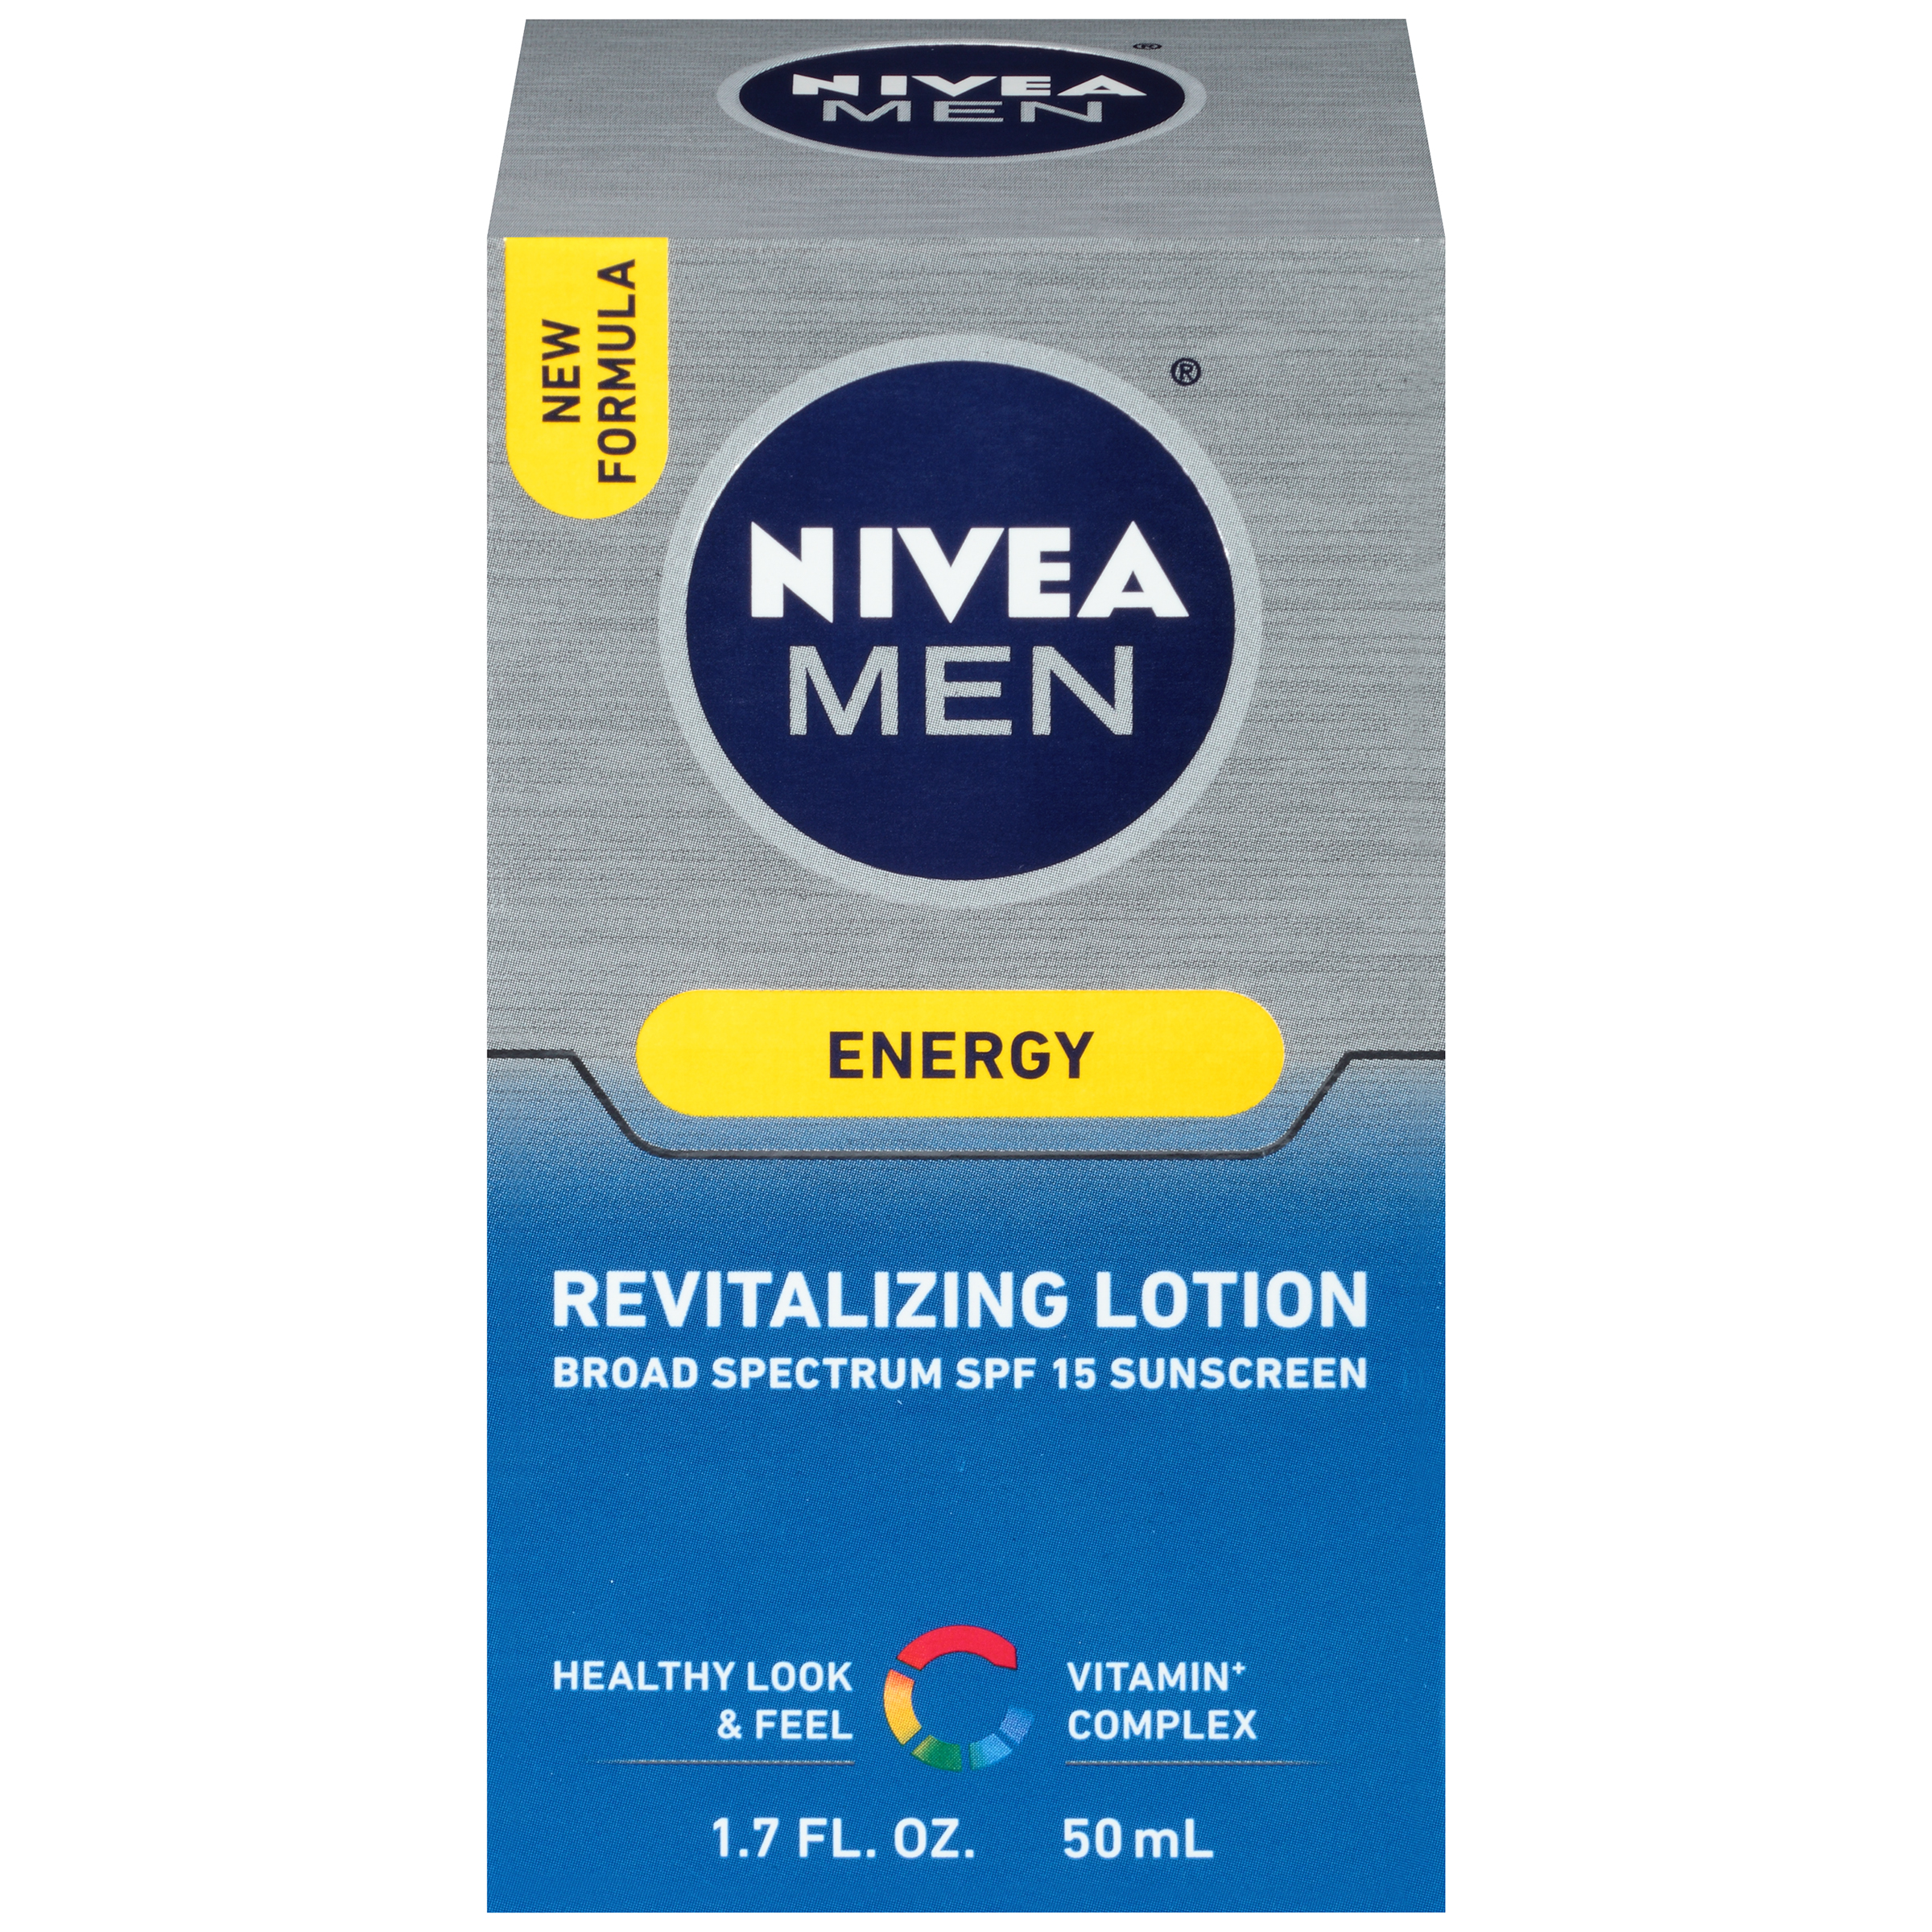 NIVEA Men Energy Lotion Broad Spectrum SPF 15 Sunscreen, 1.7 fl. oz. Bottle - image 3 of 4